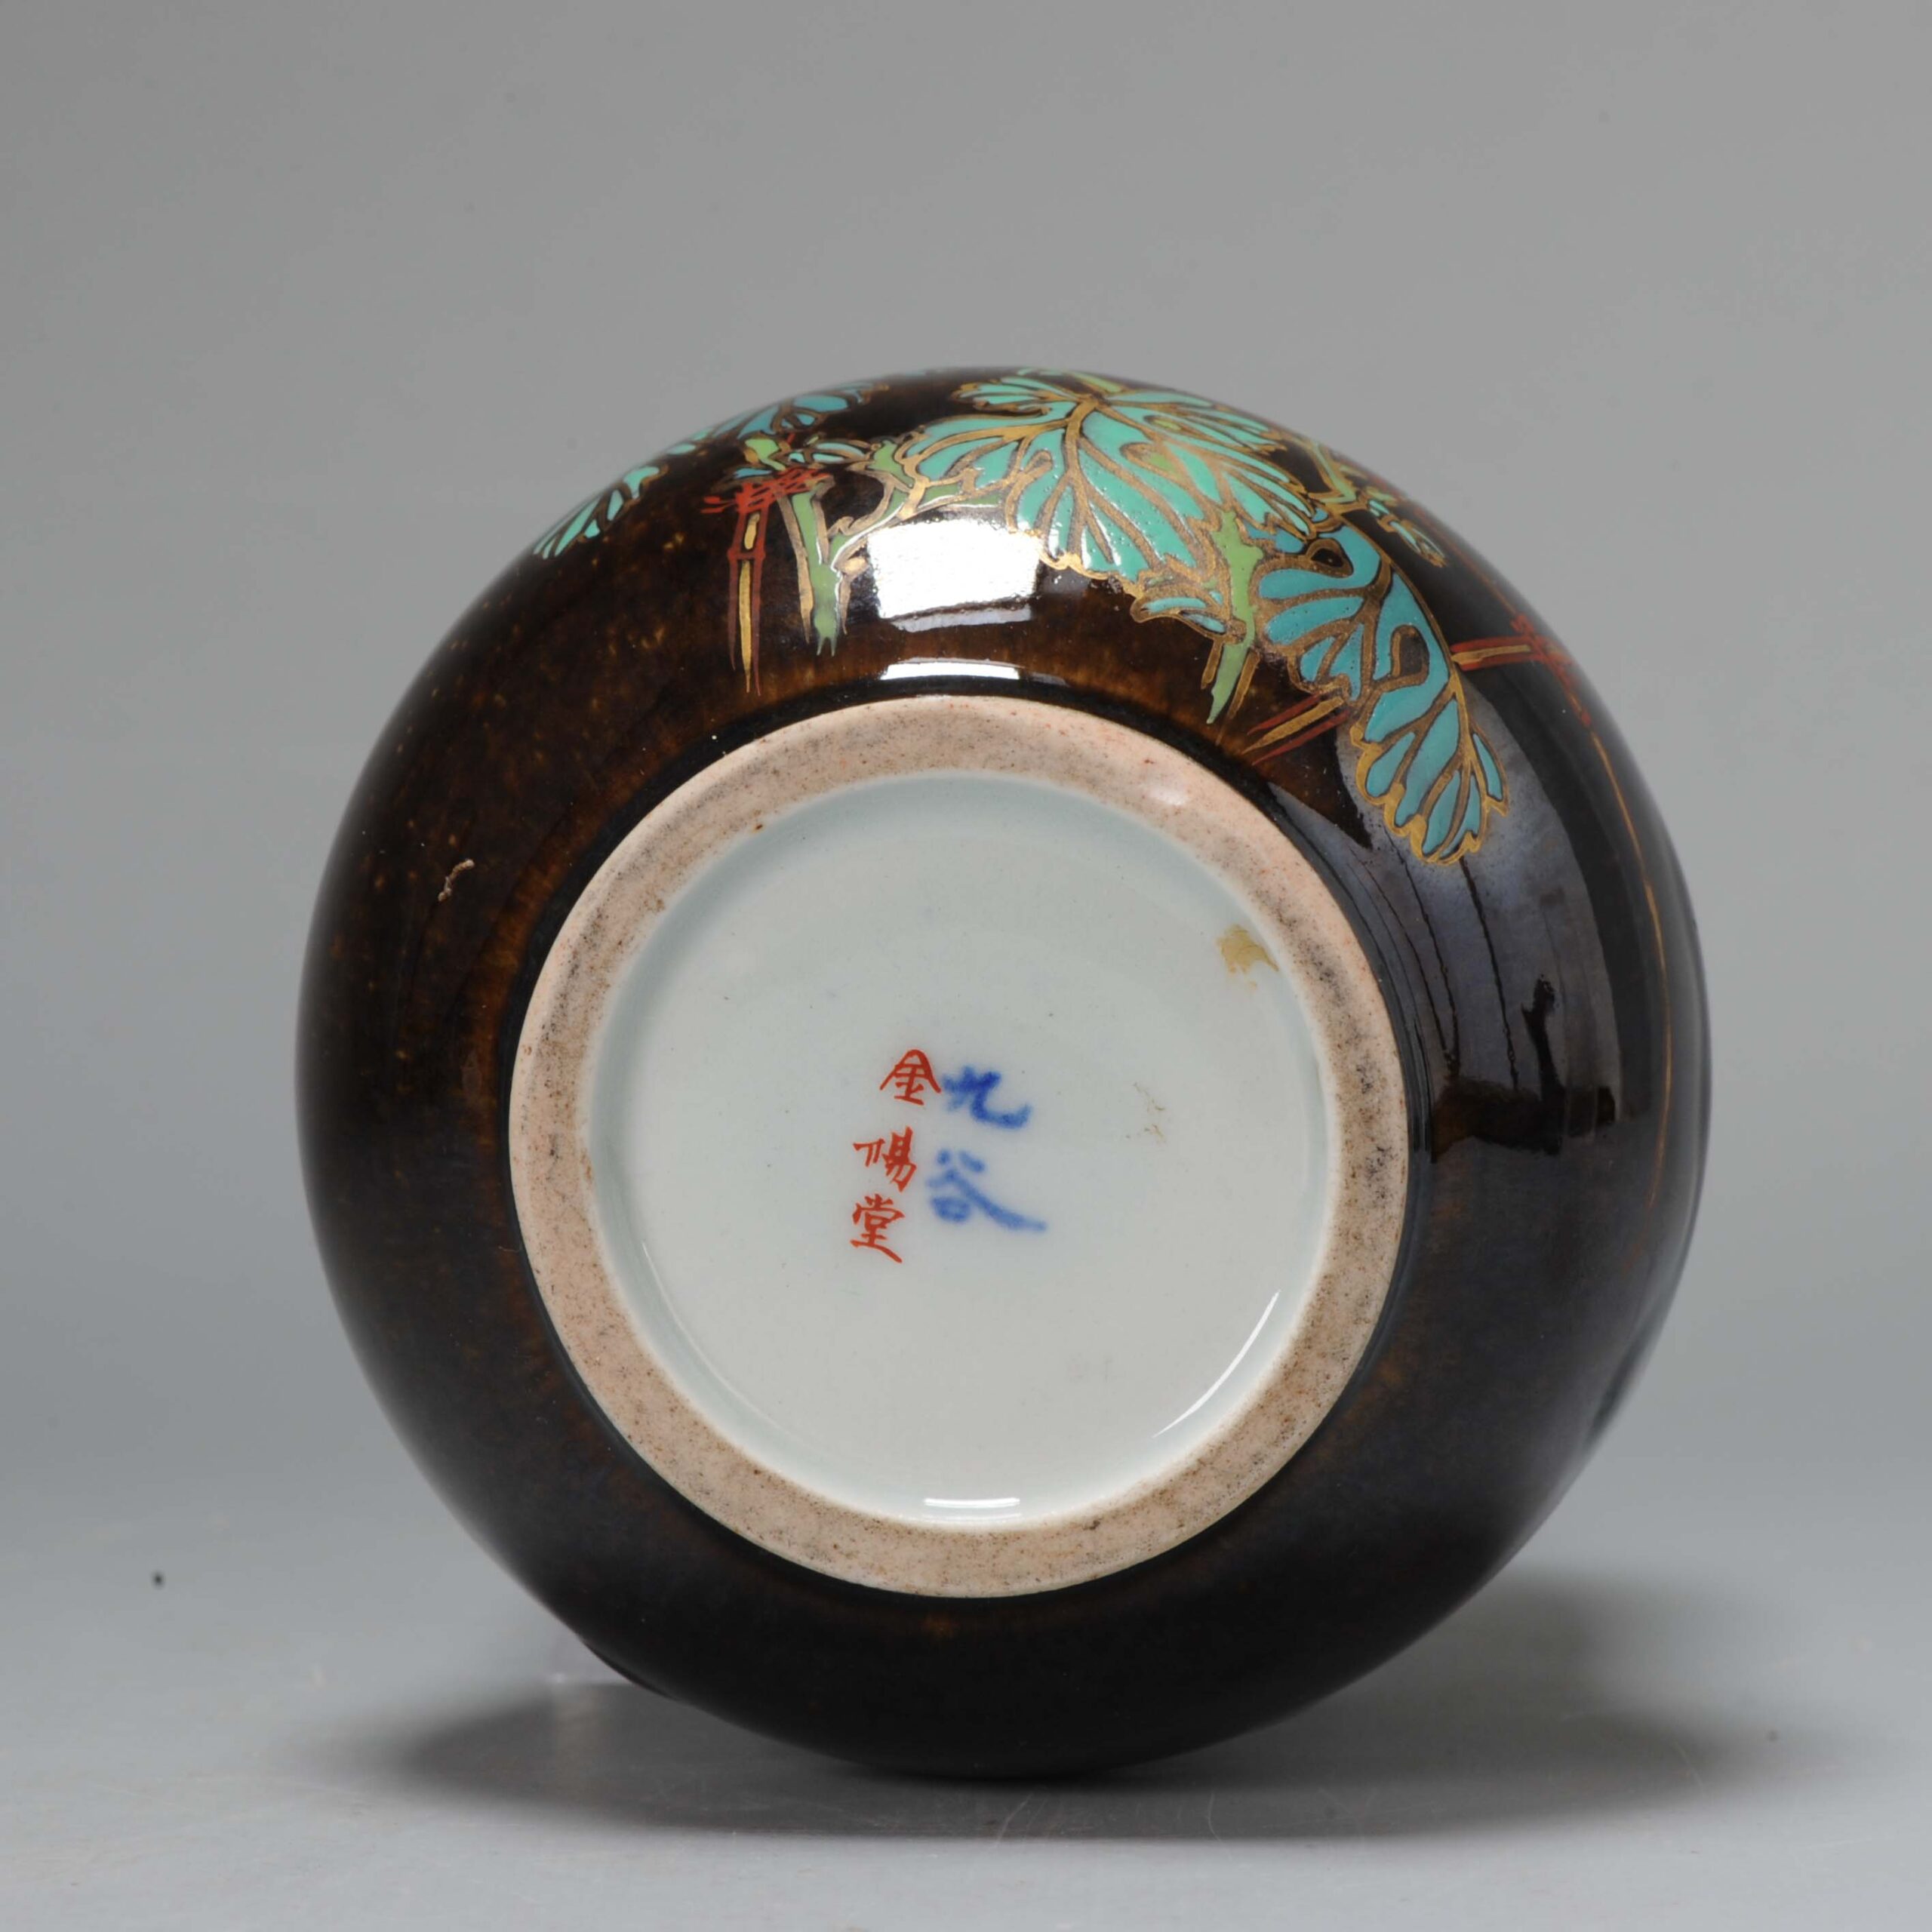 Lovely Japanese Porcelain Antique Vase in Japan 19th century Flowers Marked